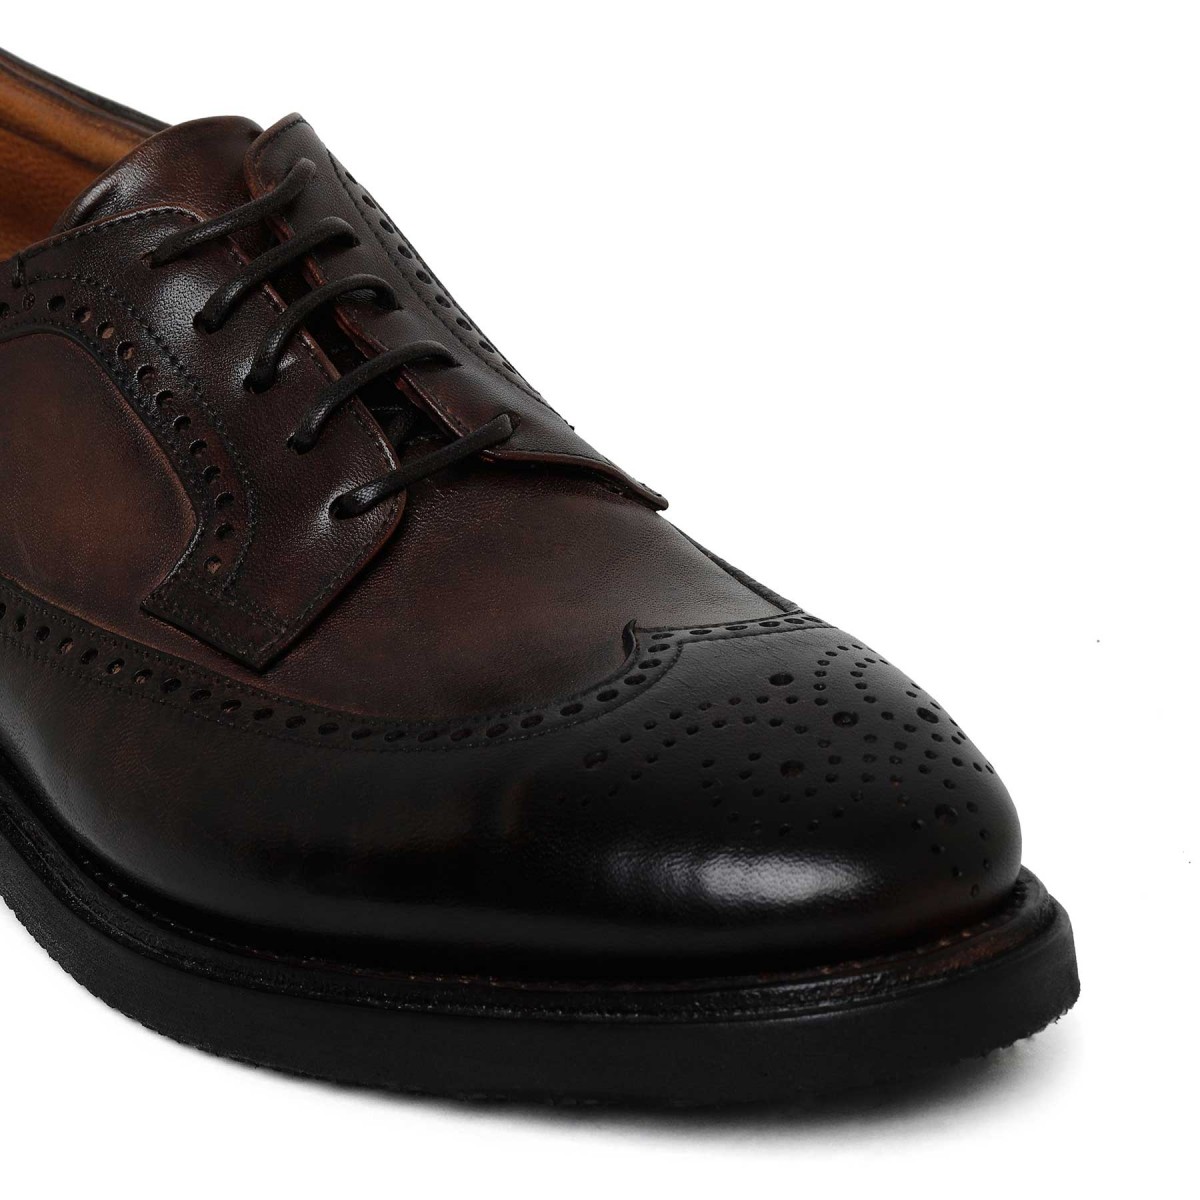 Dark brown leather Derby shoes